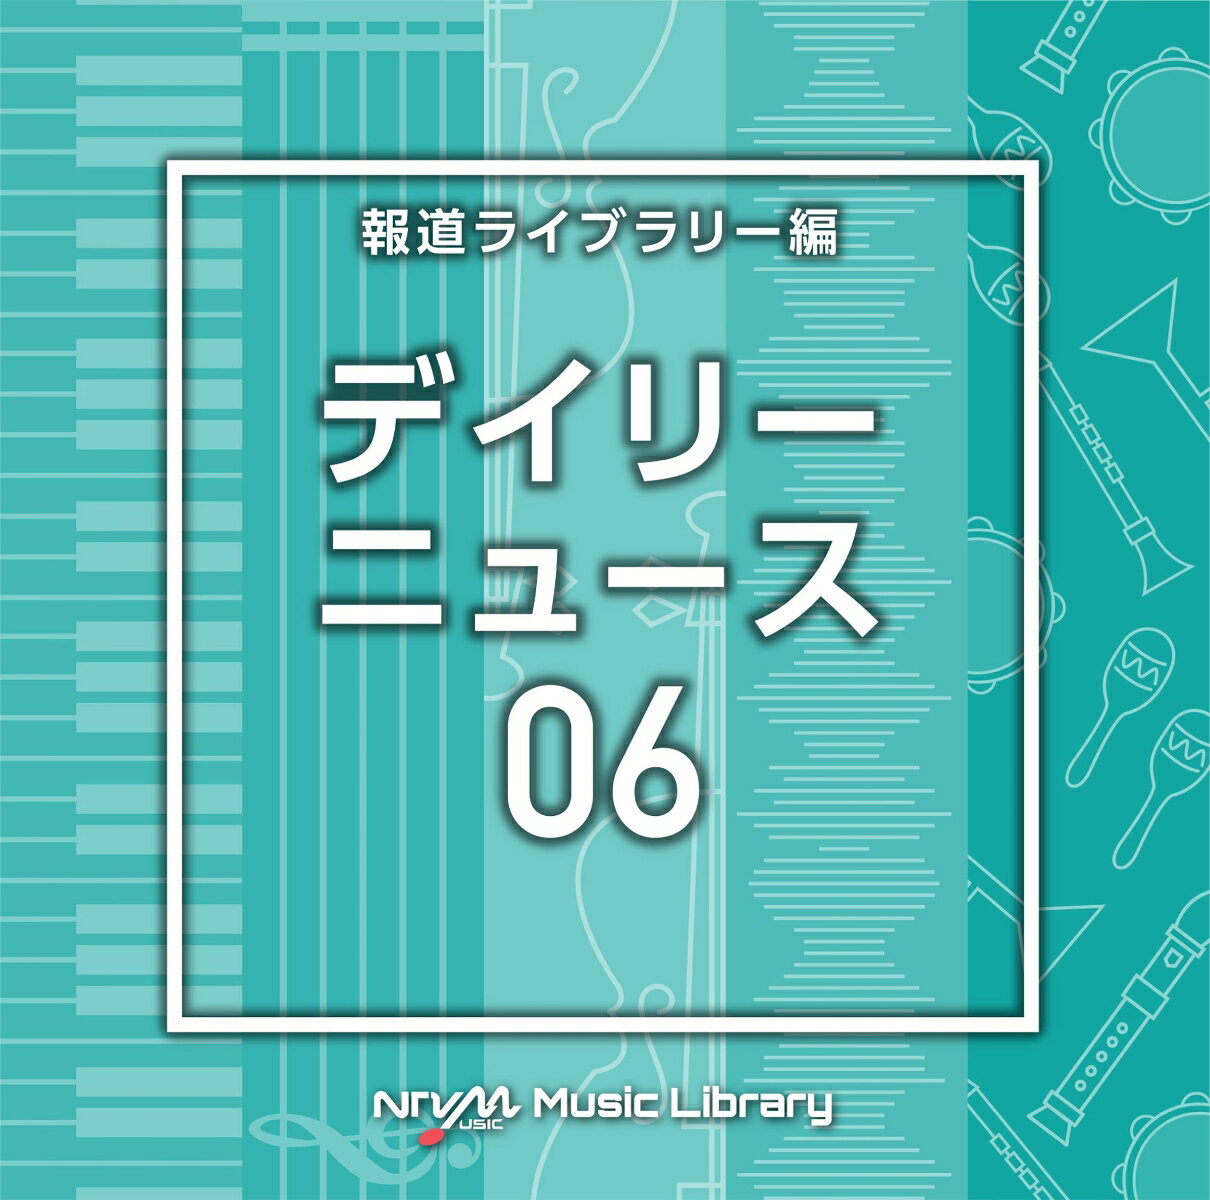 NTVM Music Library 報道ライブラリー編 デイリーニュース06 [ (BGM) ]